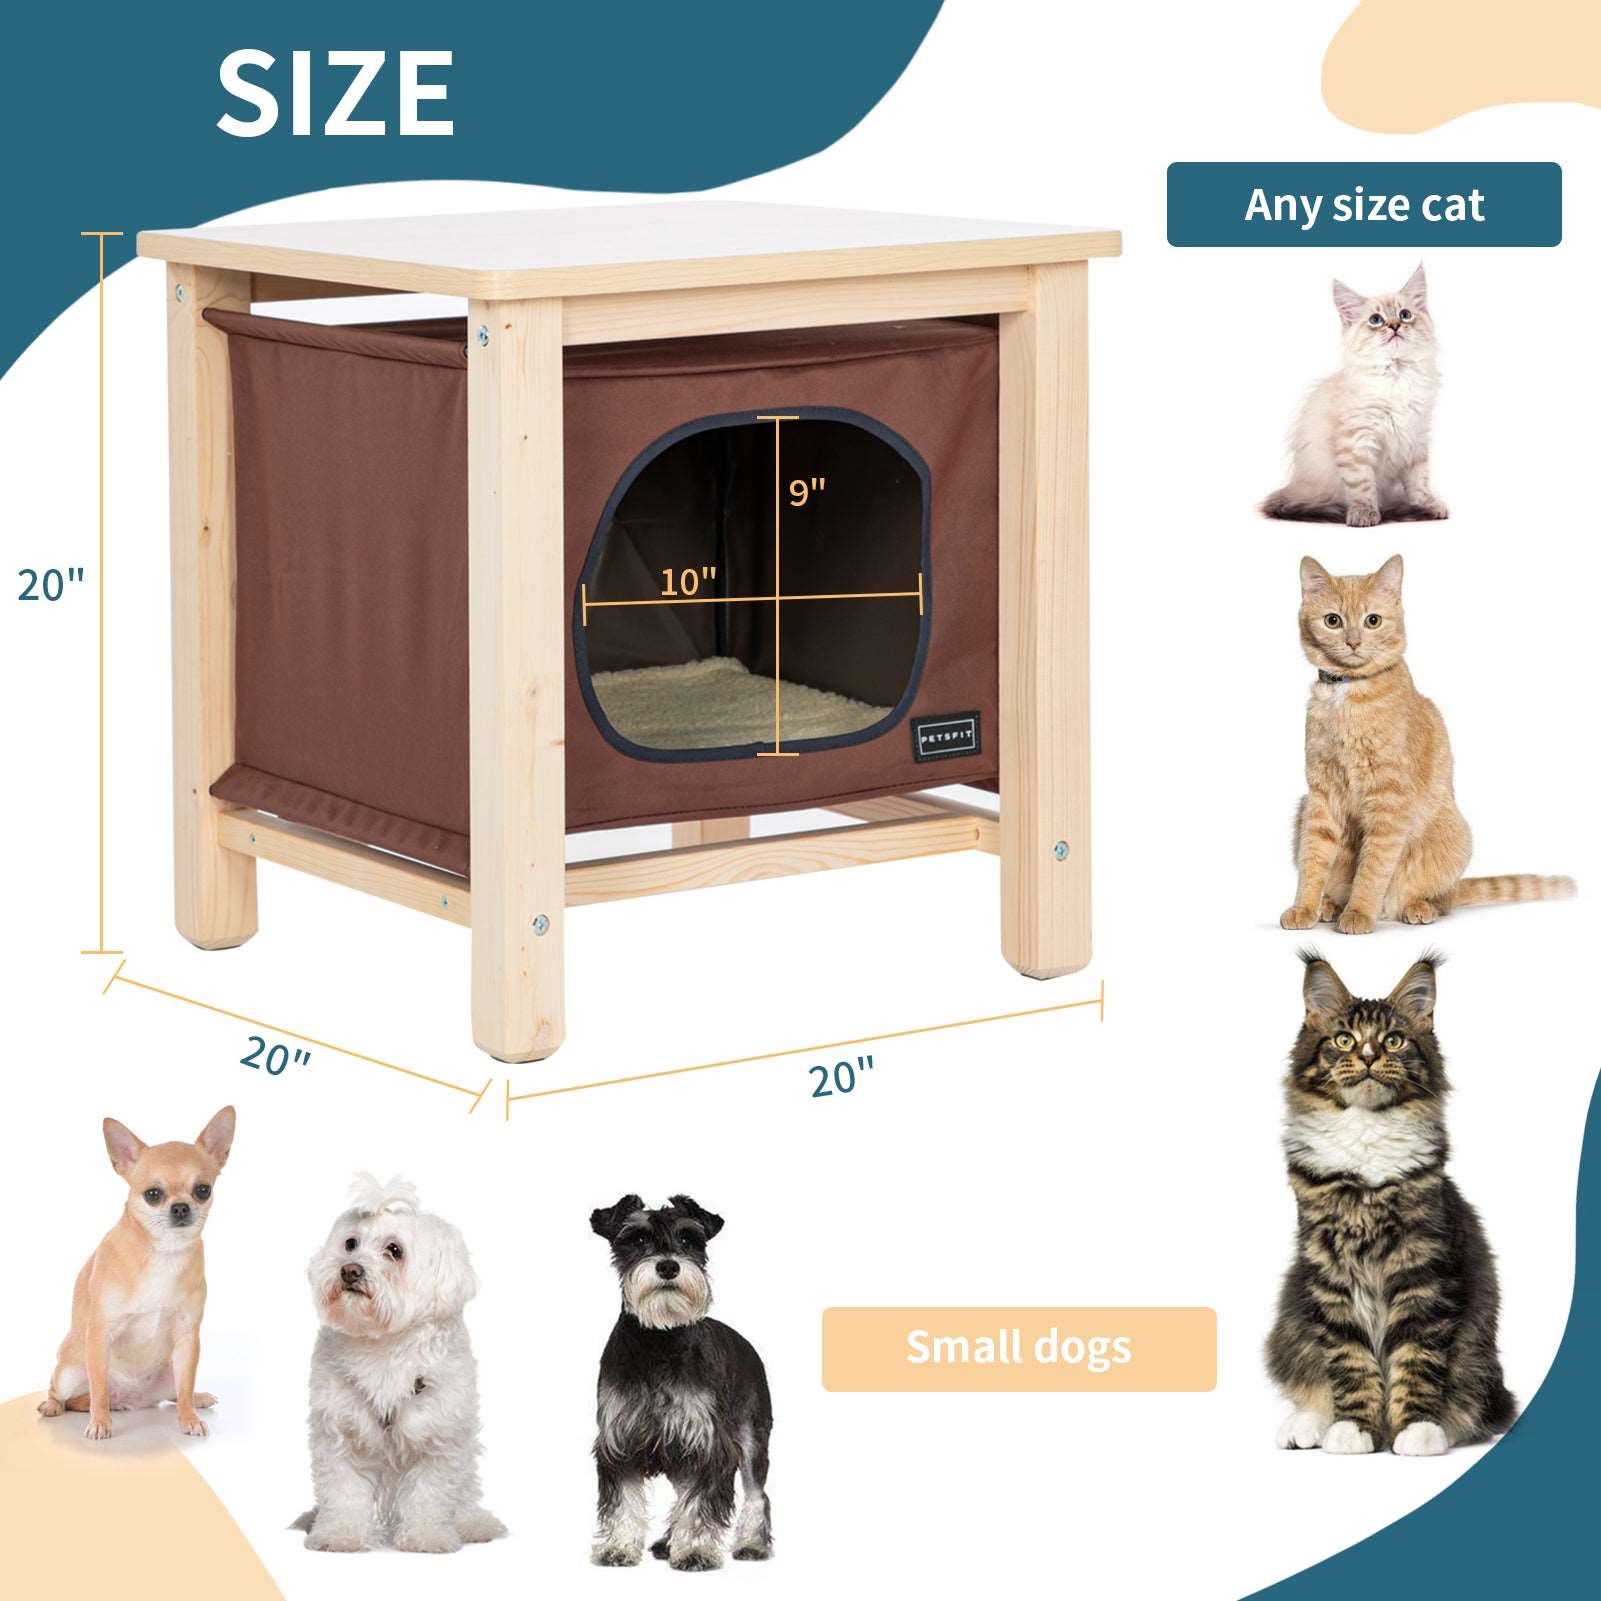 Petsfit-Hanging-Design-Cat-Cave-Small-Dog-House-Indoor-Furniture-05